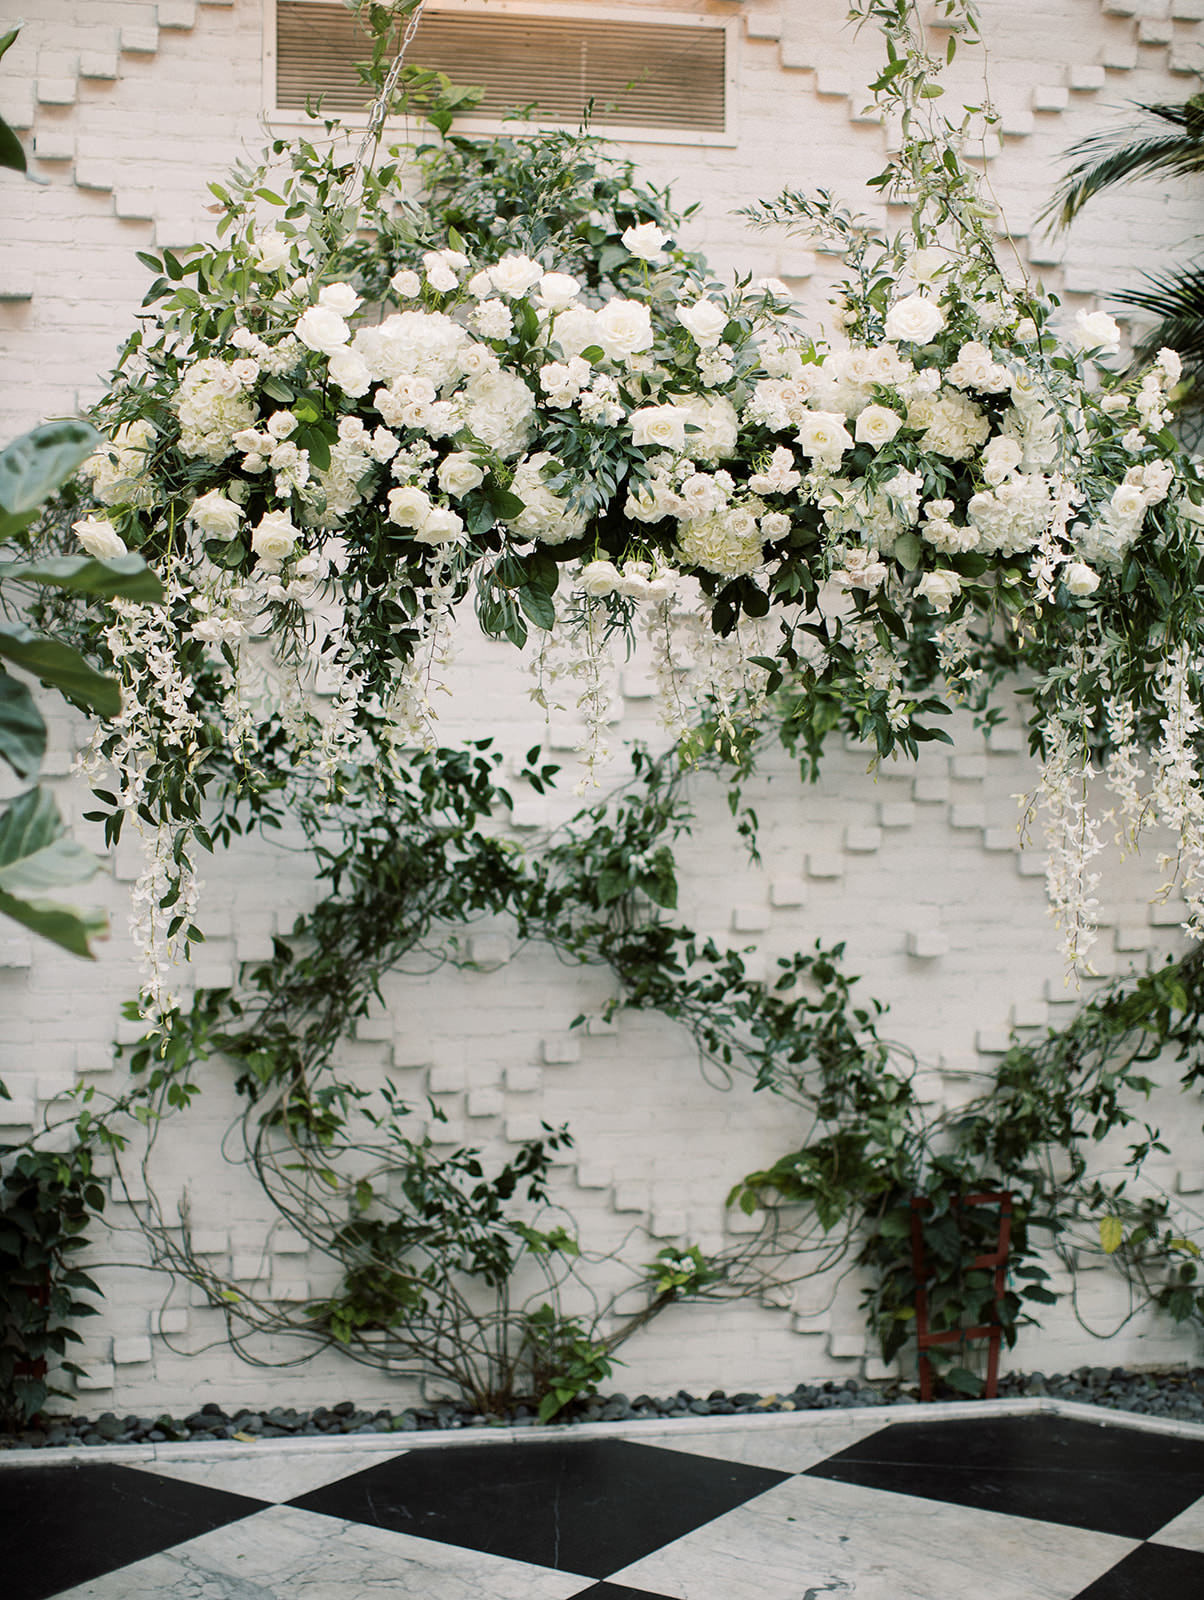 Classic Elegant Wedding Decor, Hanging Lush White Roses, Hydrangeas, Flowers and Greenery Flowers | Tampa Bay Wedding Florist Botanica | South Tampa Wedding Venue Oxford Exchange